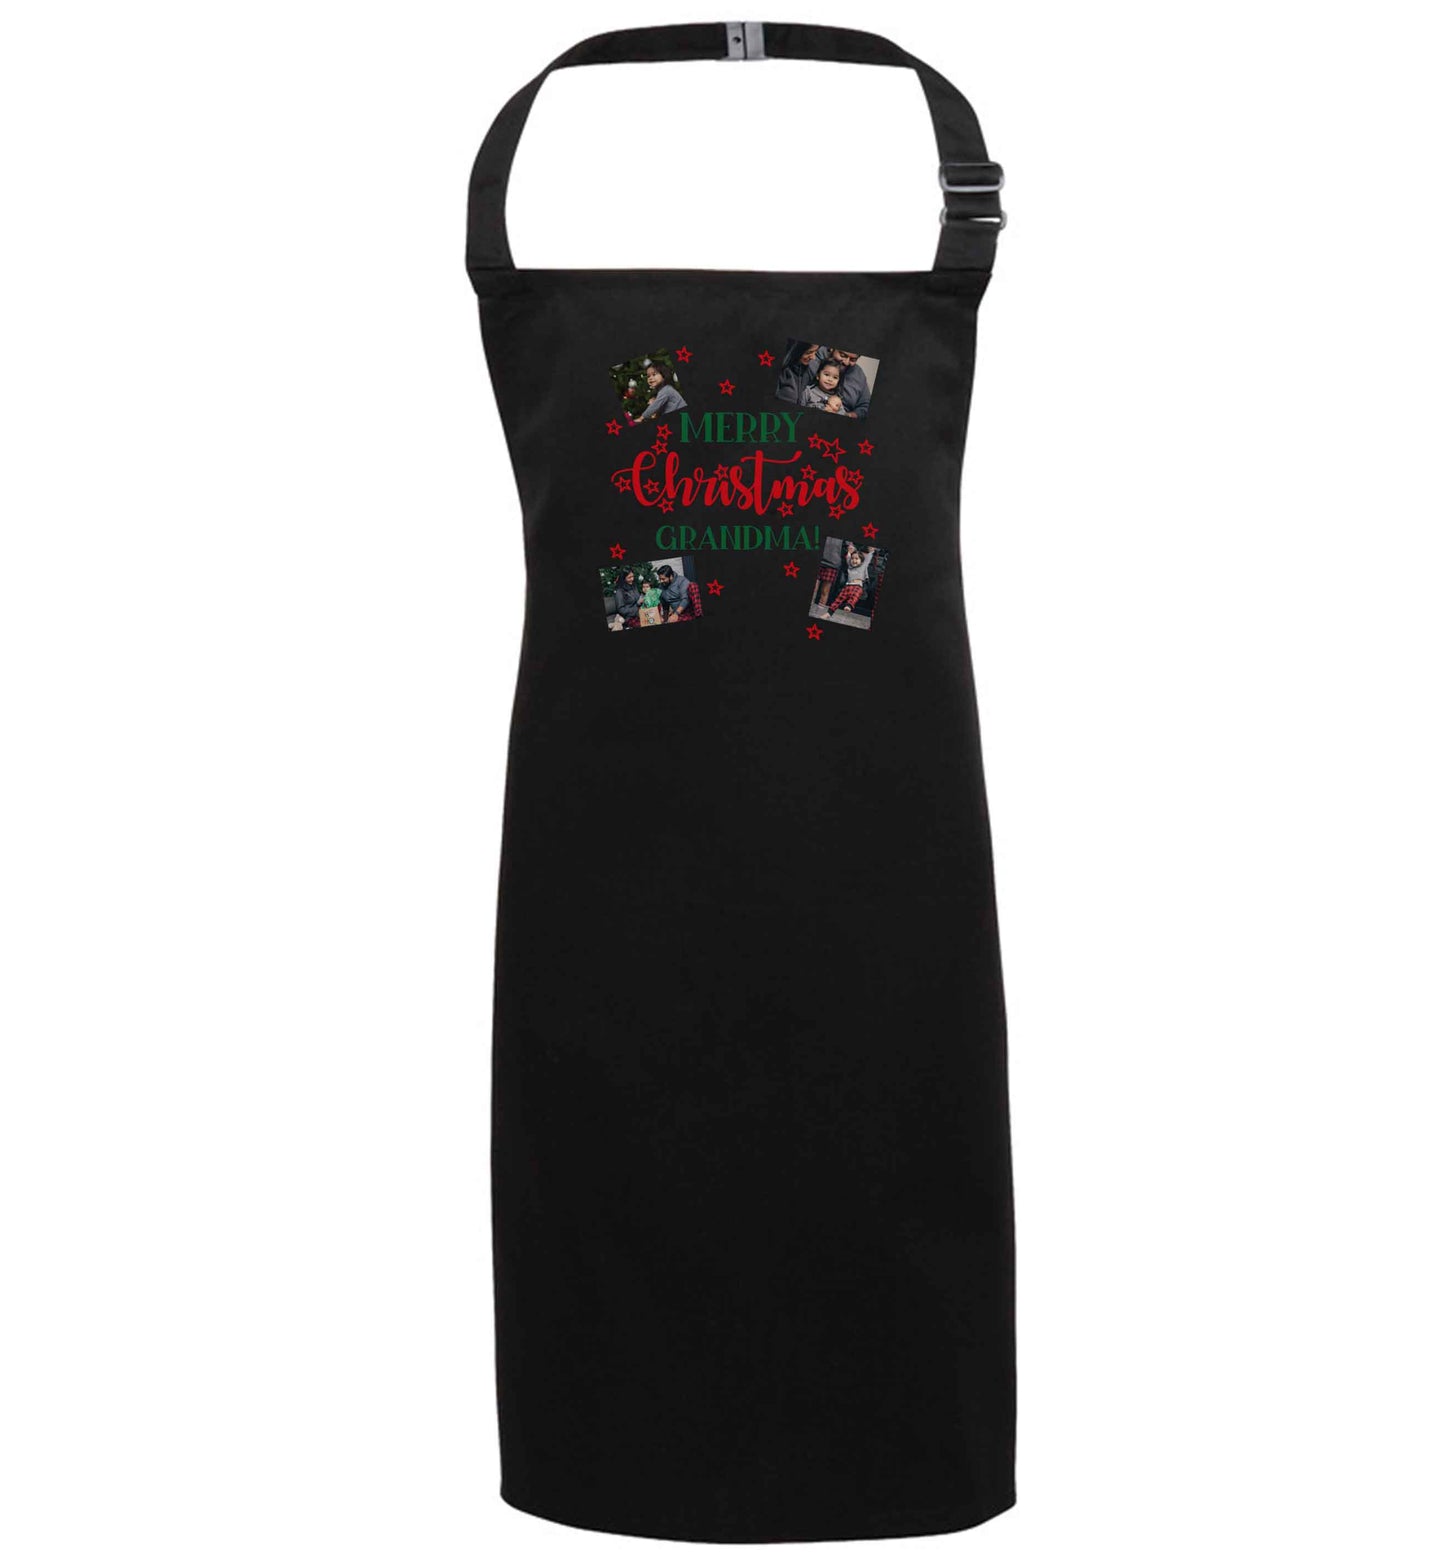 Merry Christmas grandma black apron 7-10 years